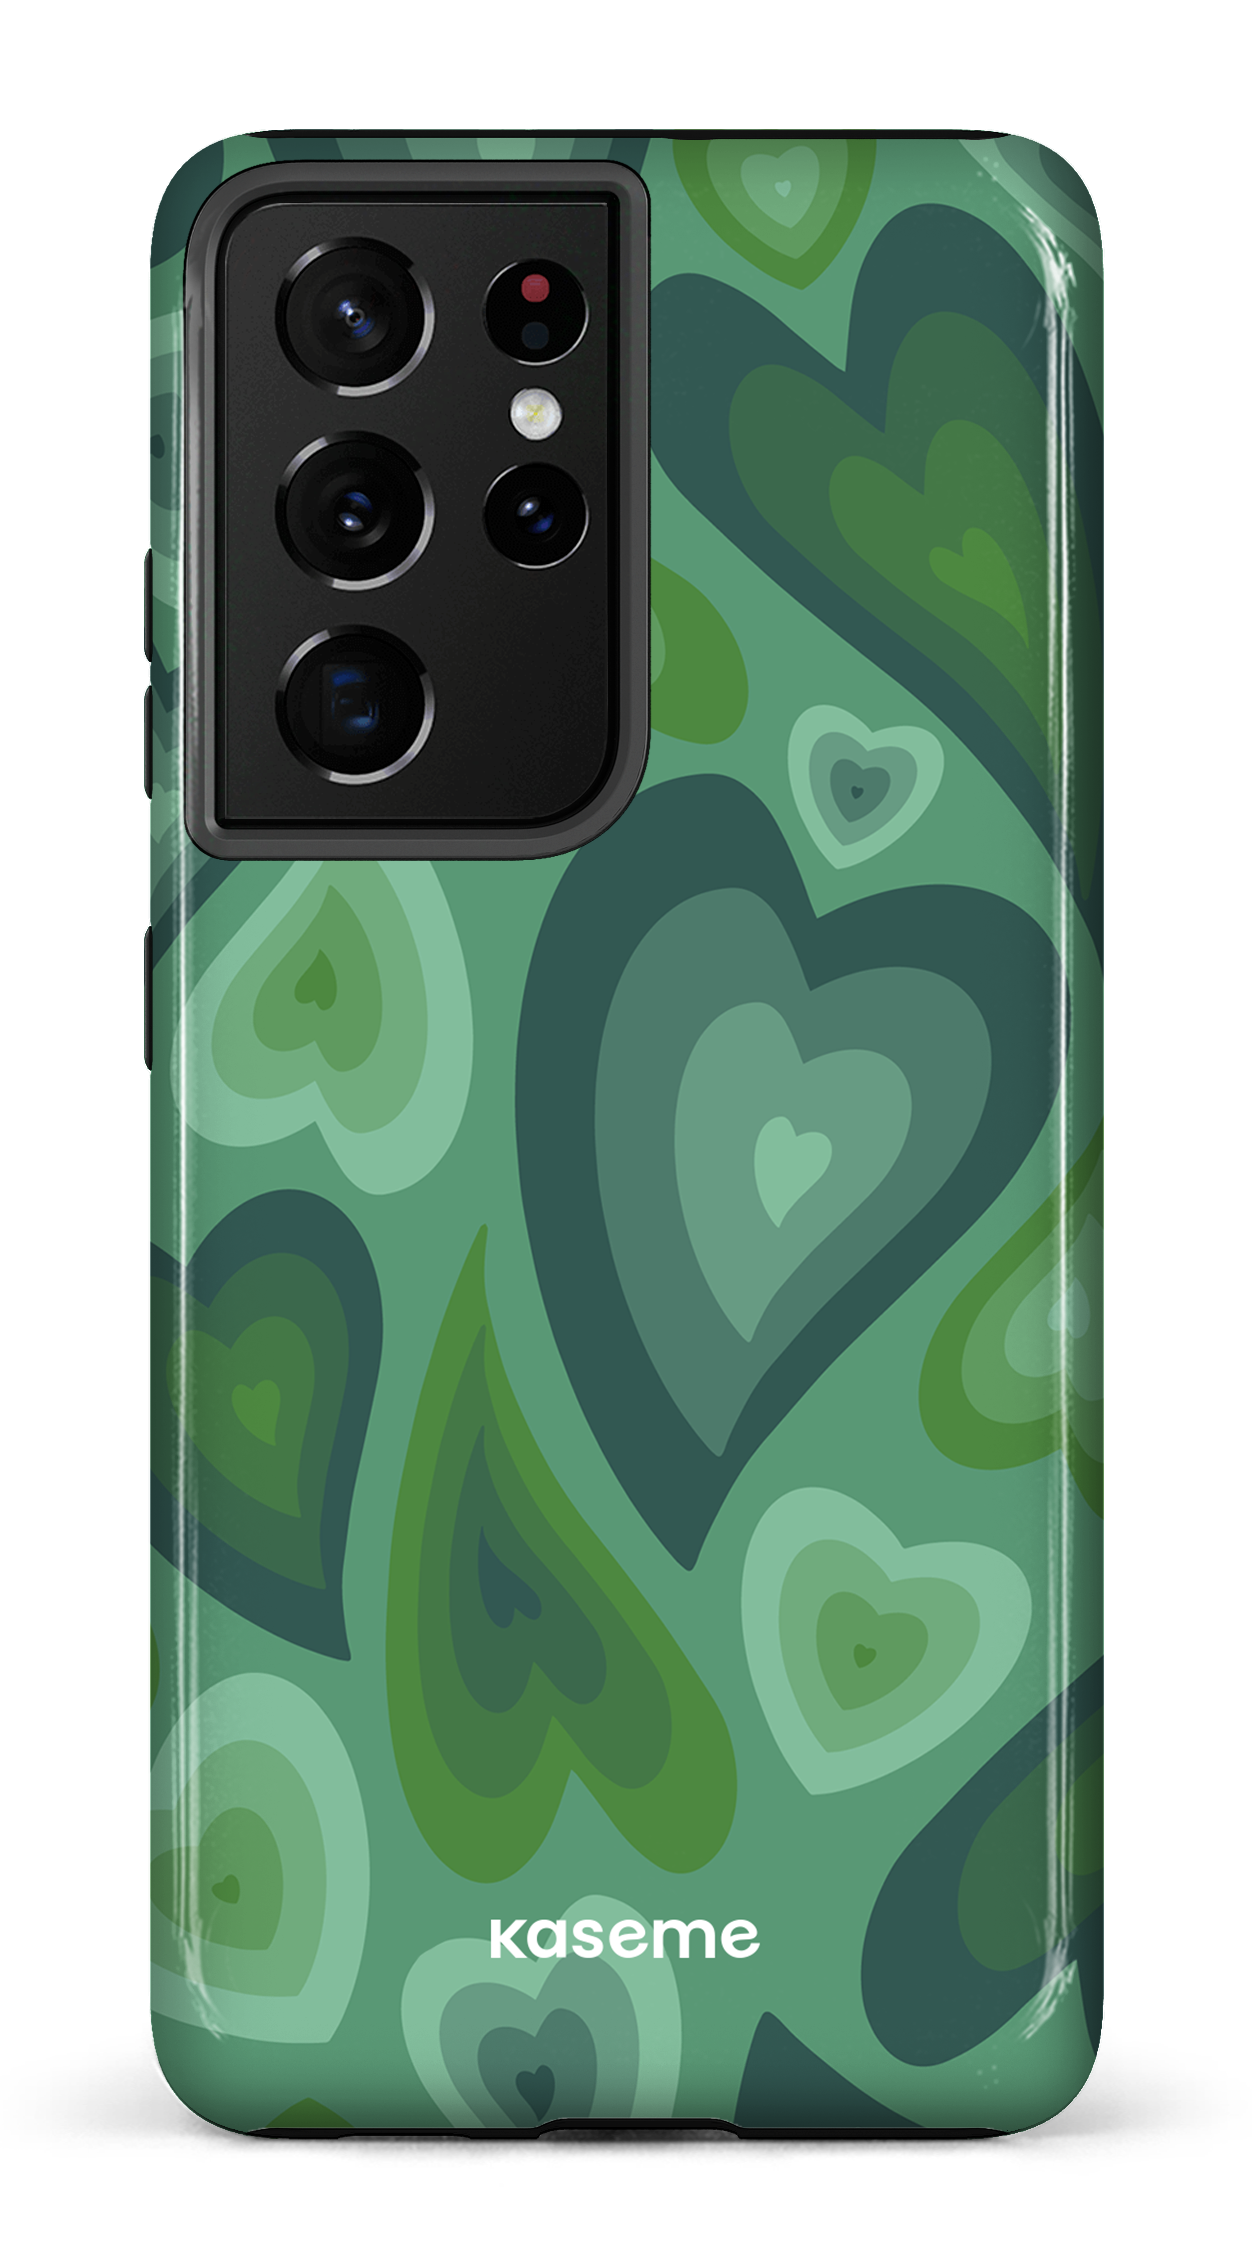 Dulce green - Galaxy S21 Ultra